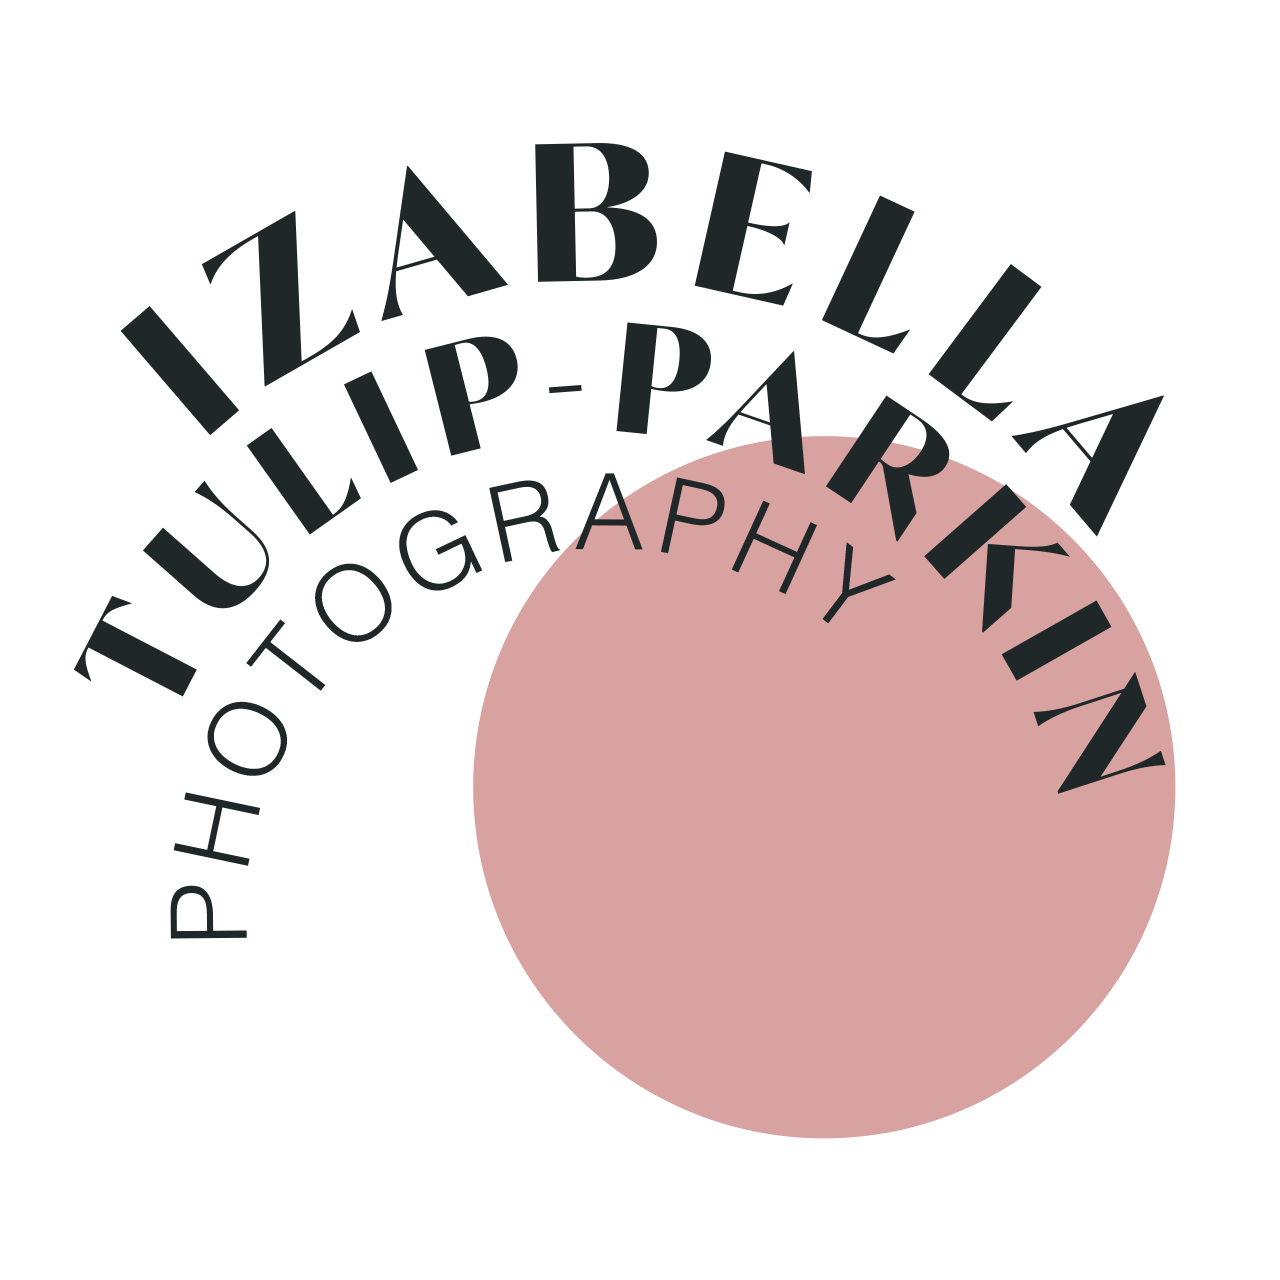 Izabella Tulip-Parkin